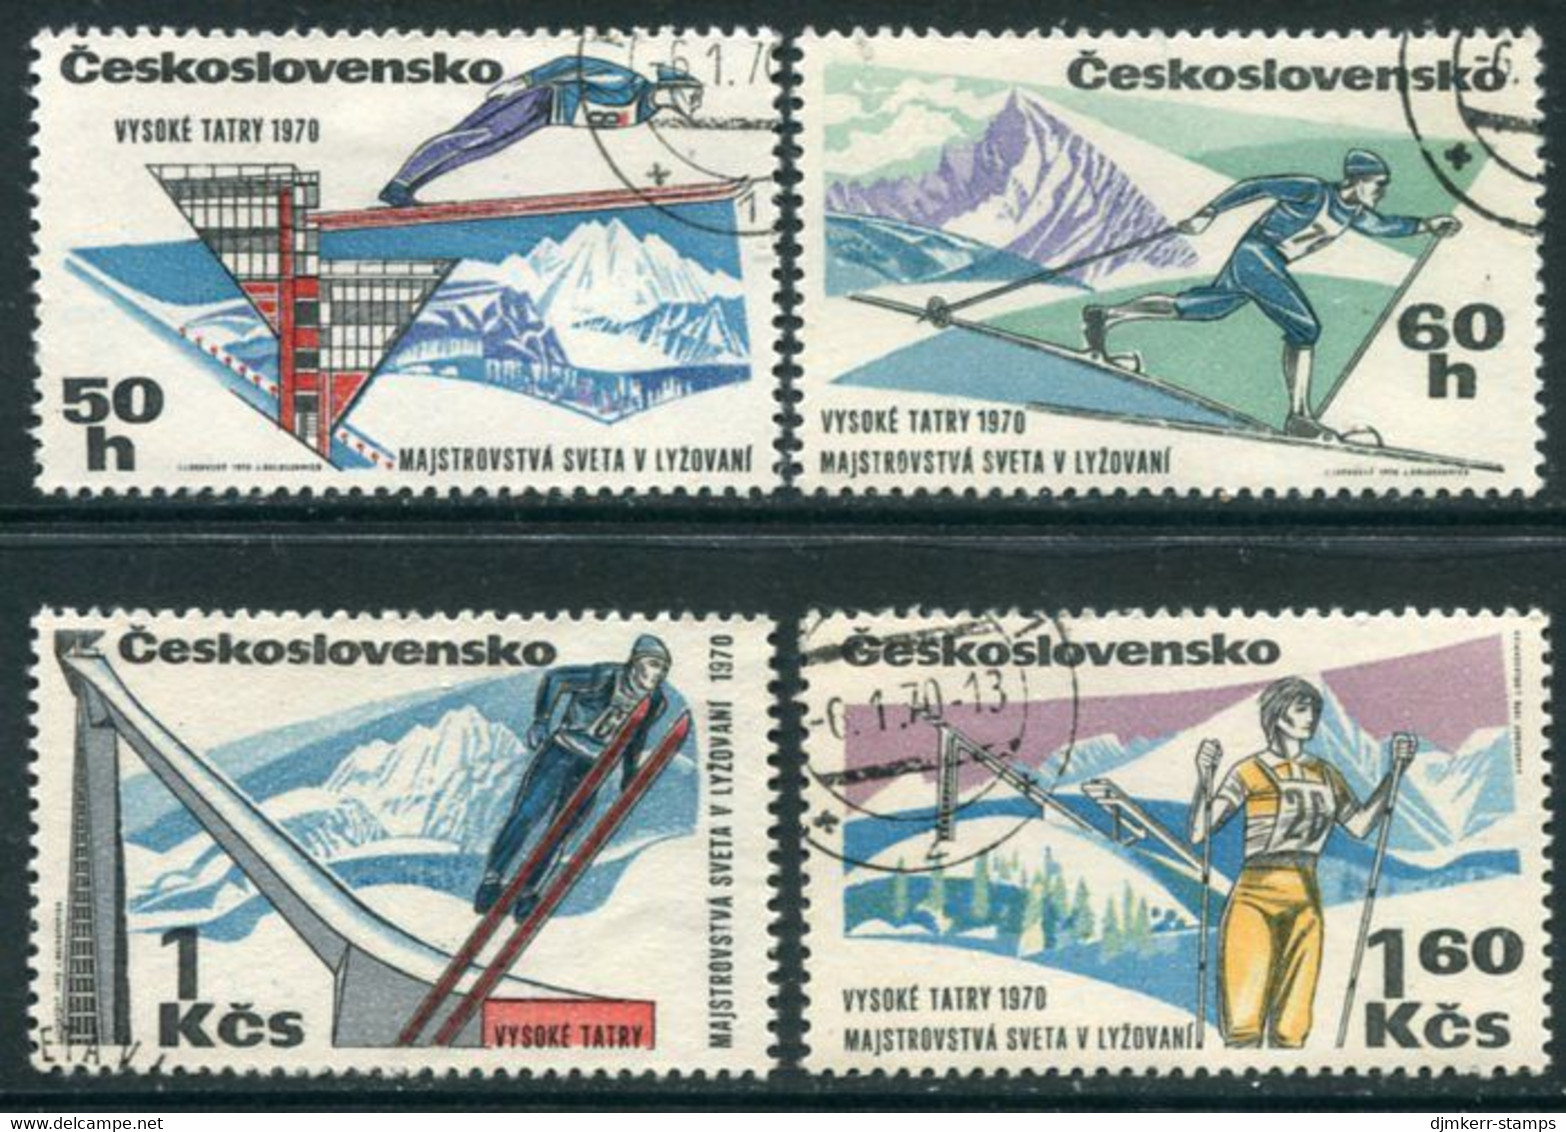 CZECHOSLOVAKIA 1970 Skiing World Championship Used Michel 1916-18 - Oblitérés